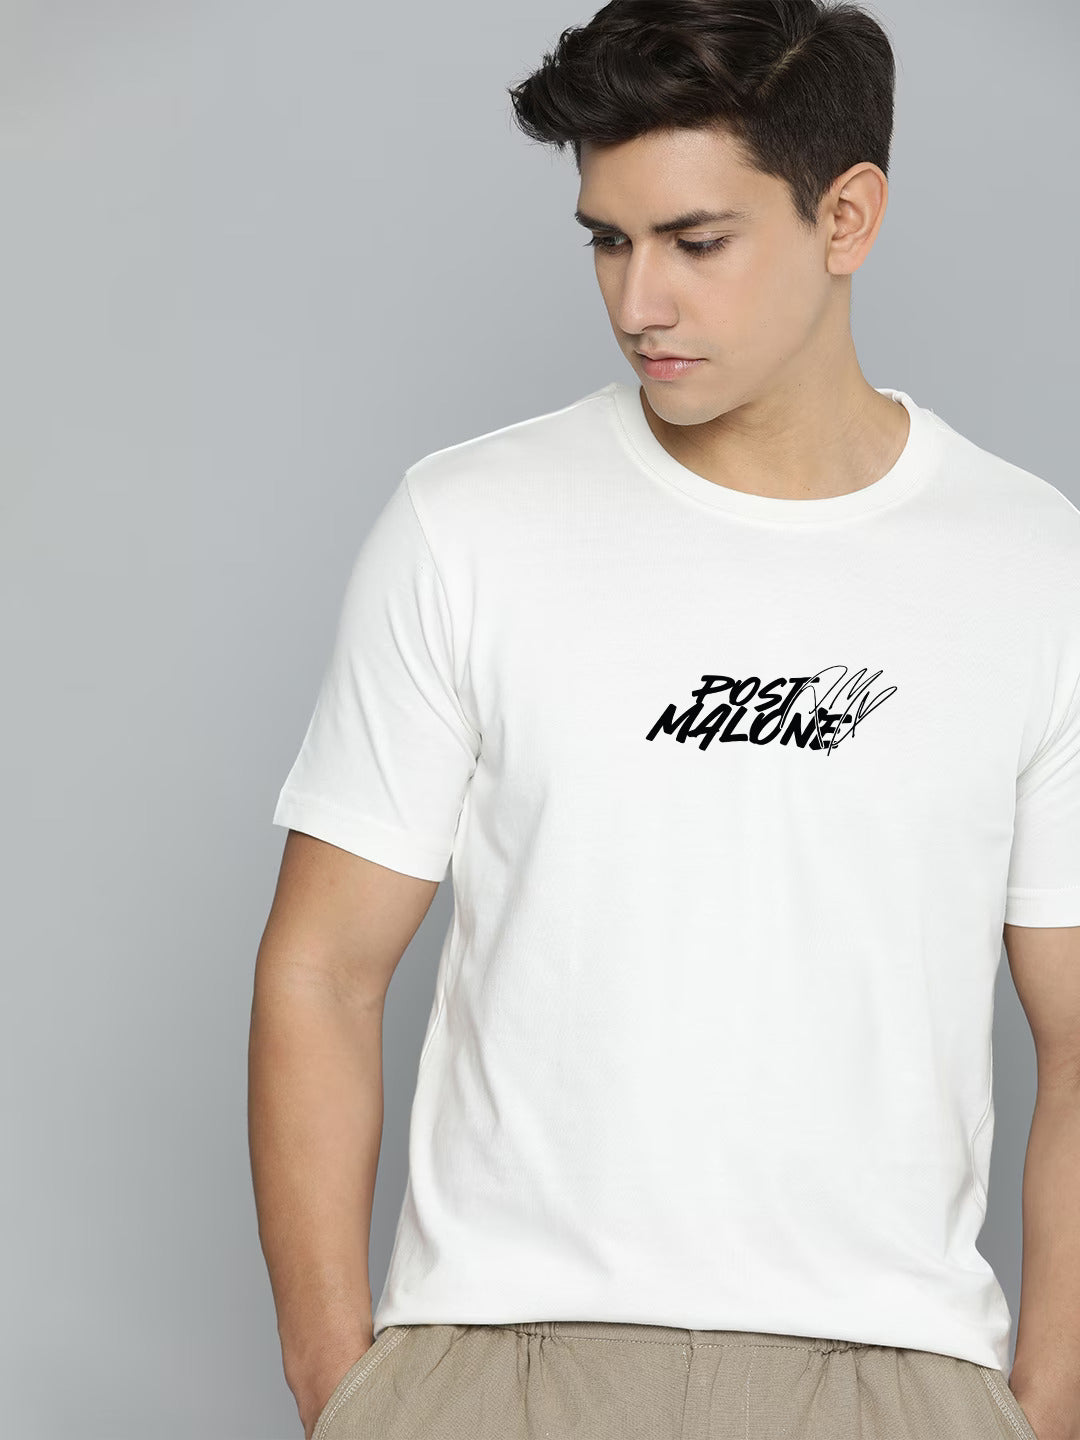 Post Malone Half Sleeve T-Shirt